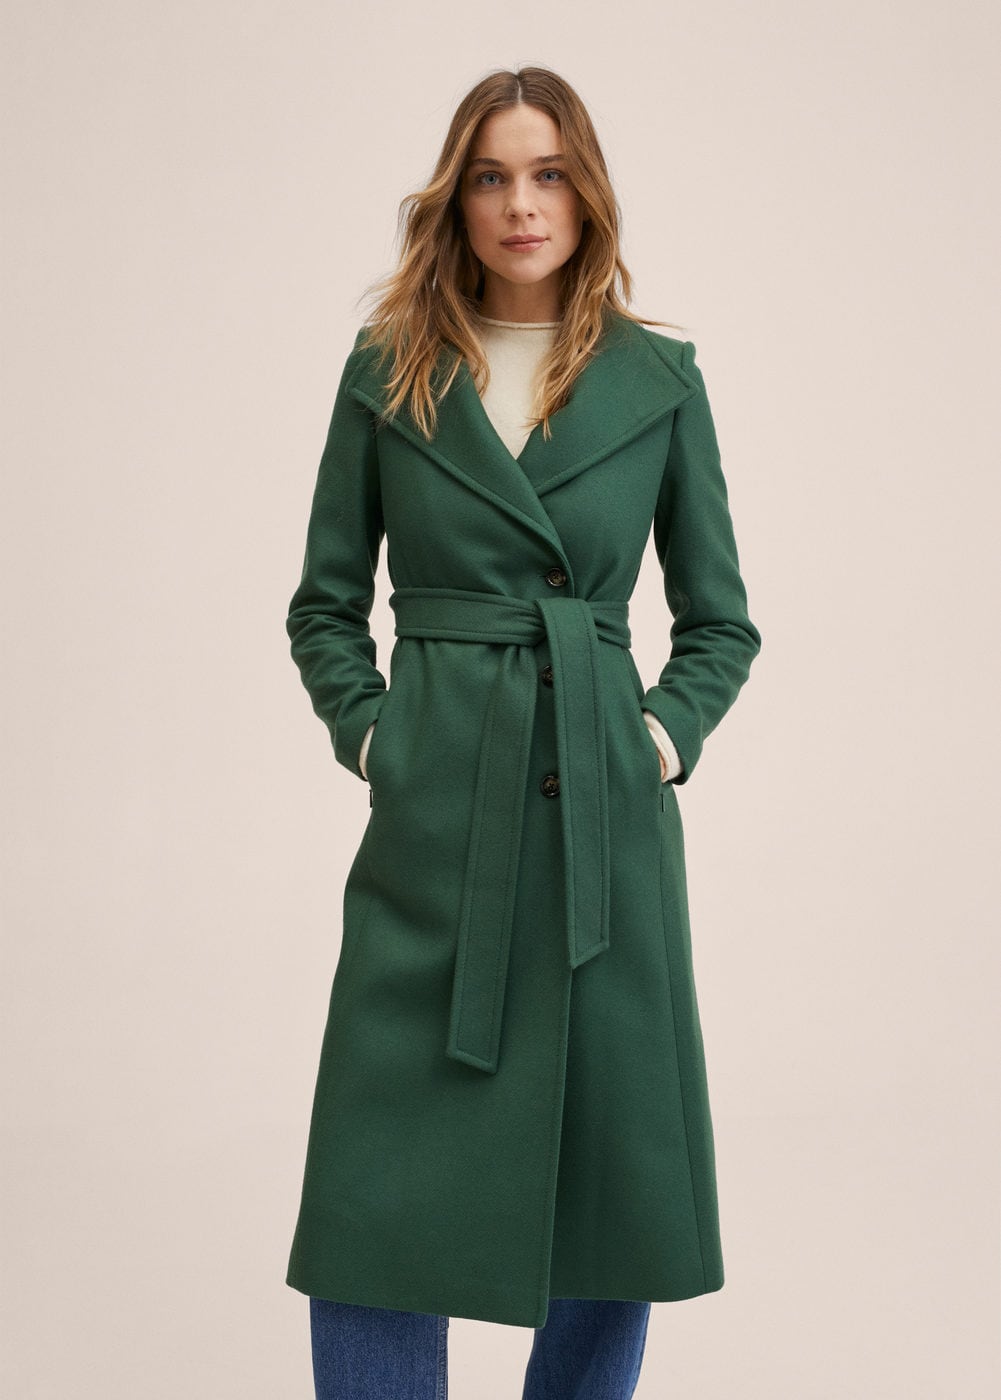 29 Stylish Long Wool Coats For Women, Ankle Length Coat Ladies